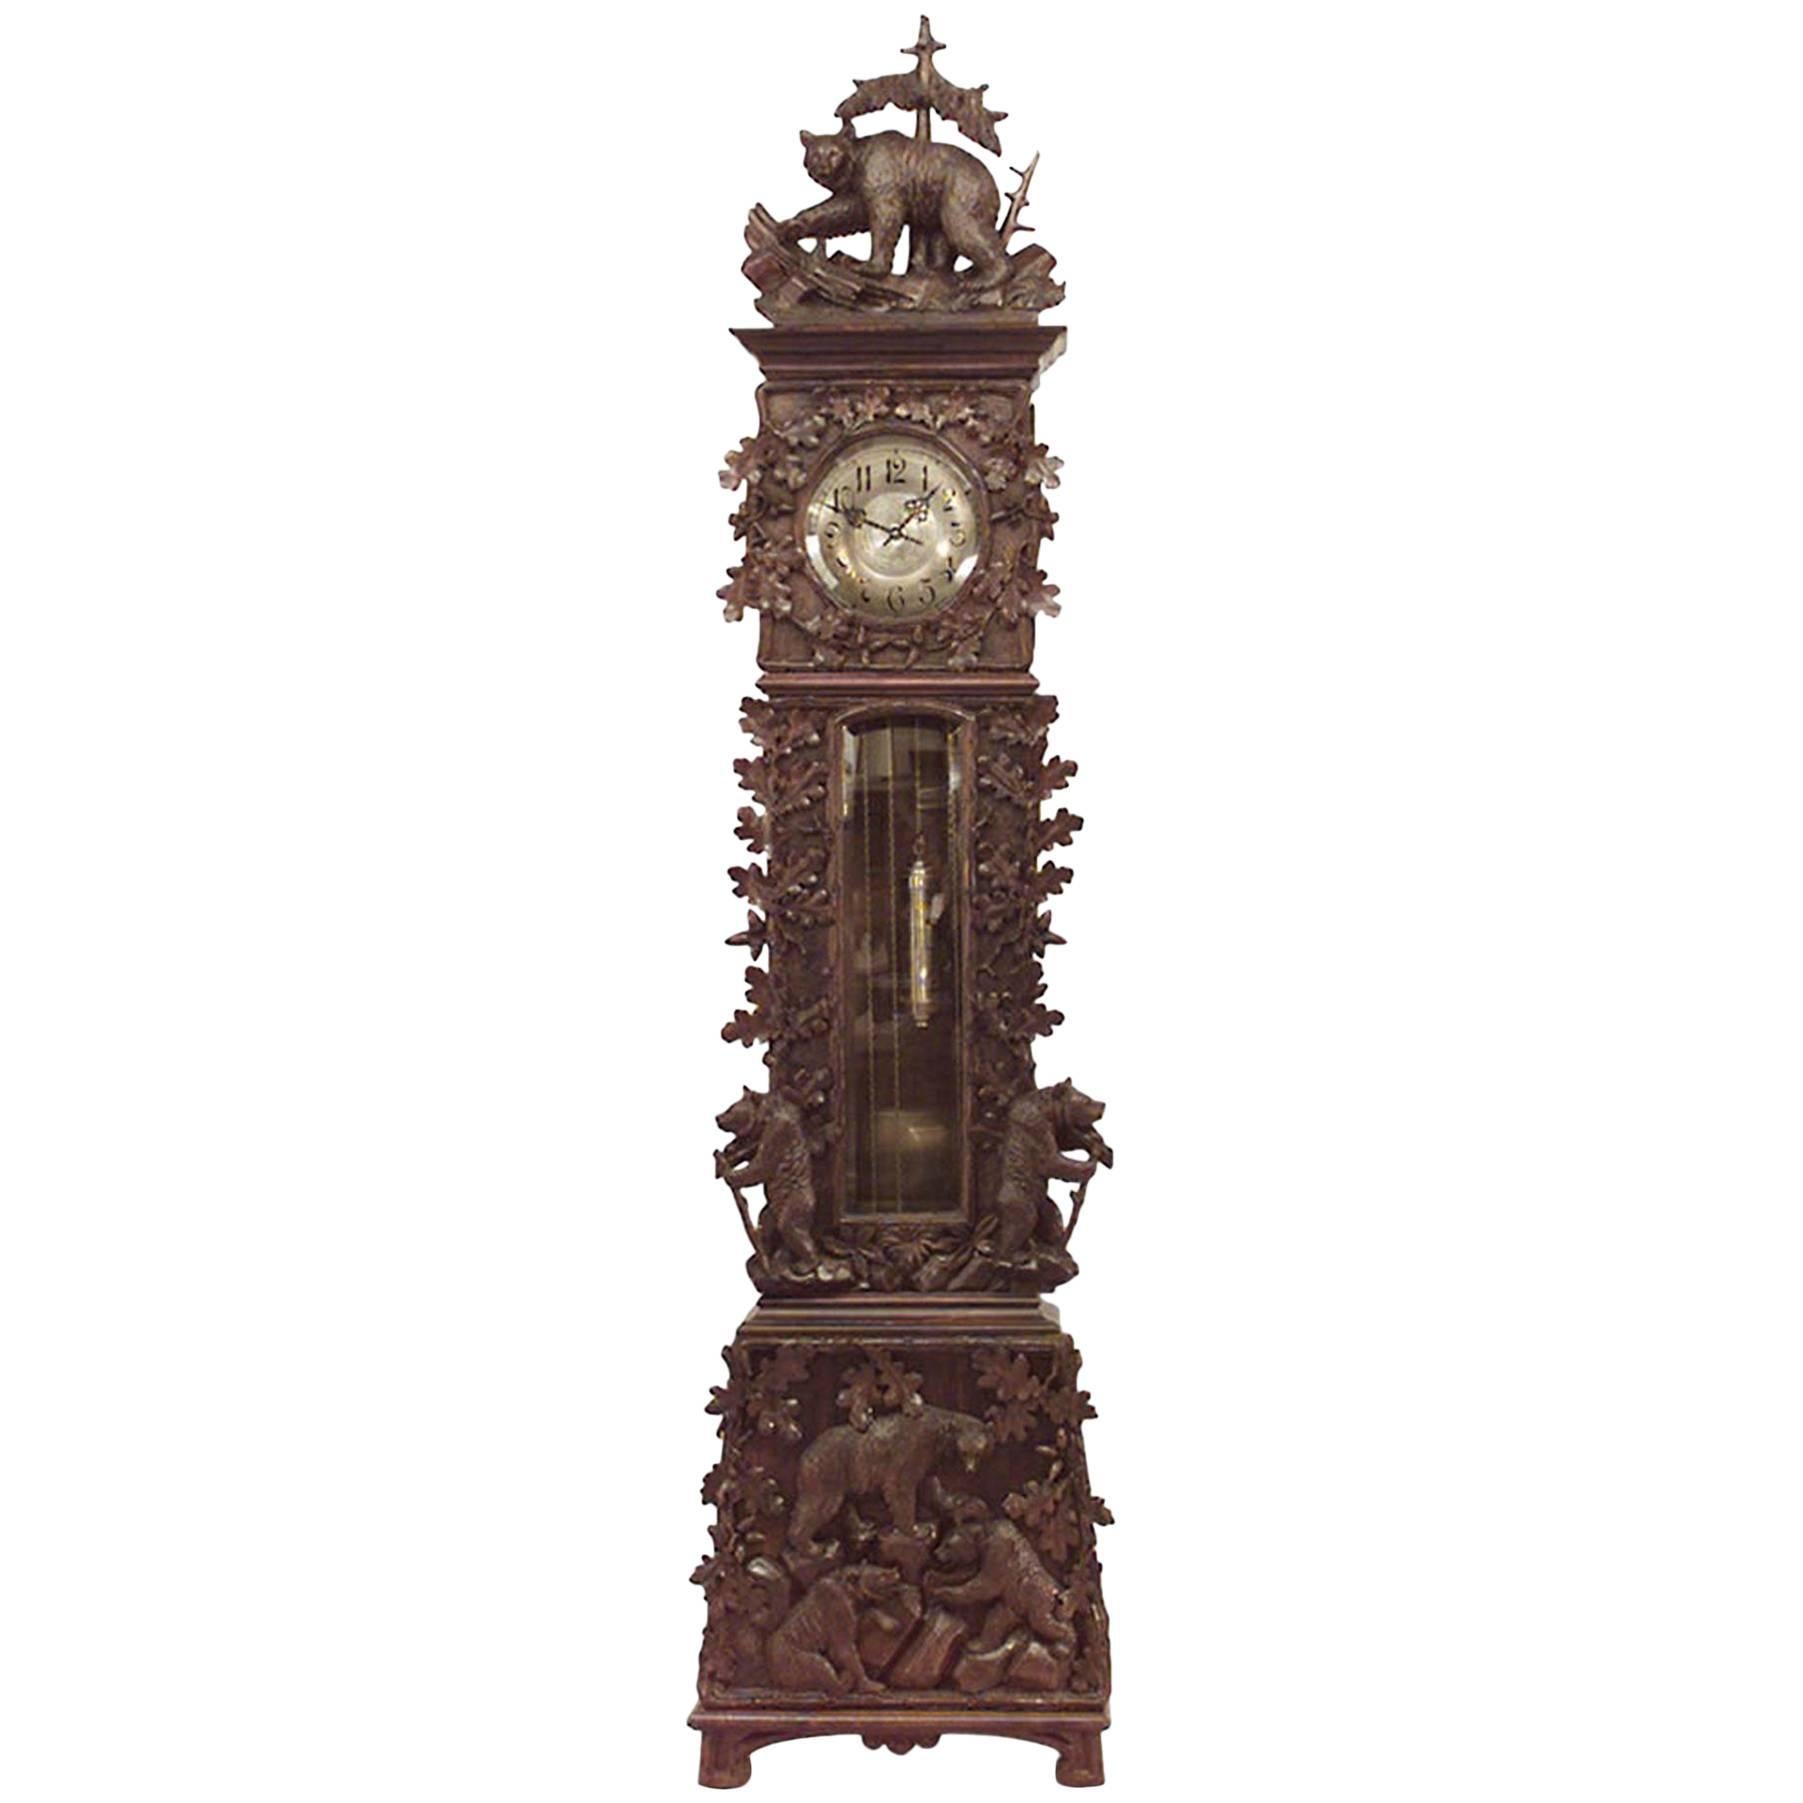 Grandfather-Uhr aus schwarzem Walnussholz, rustikale Art